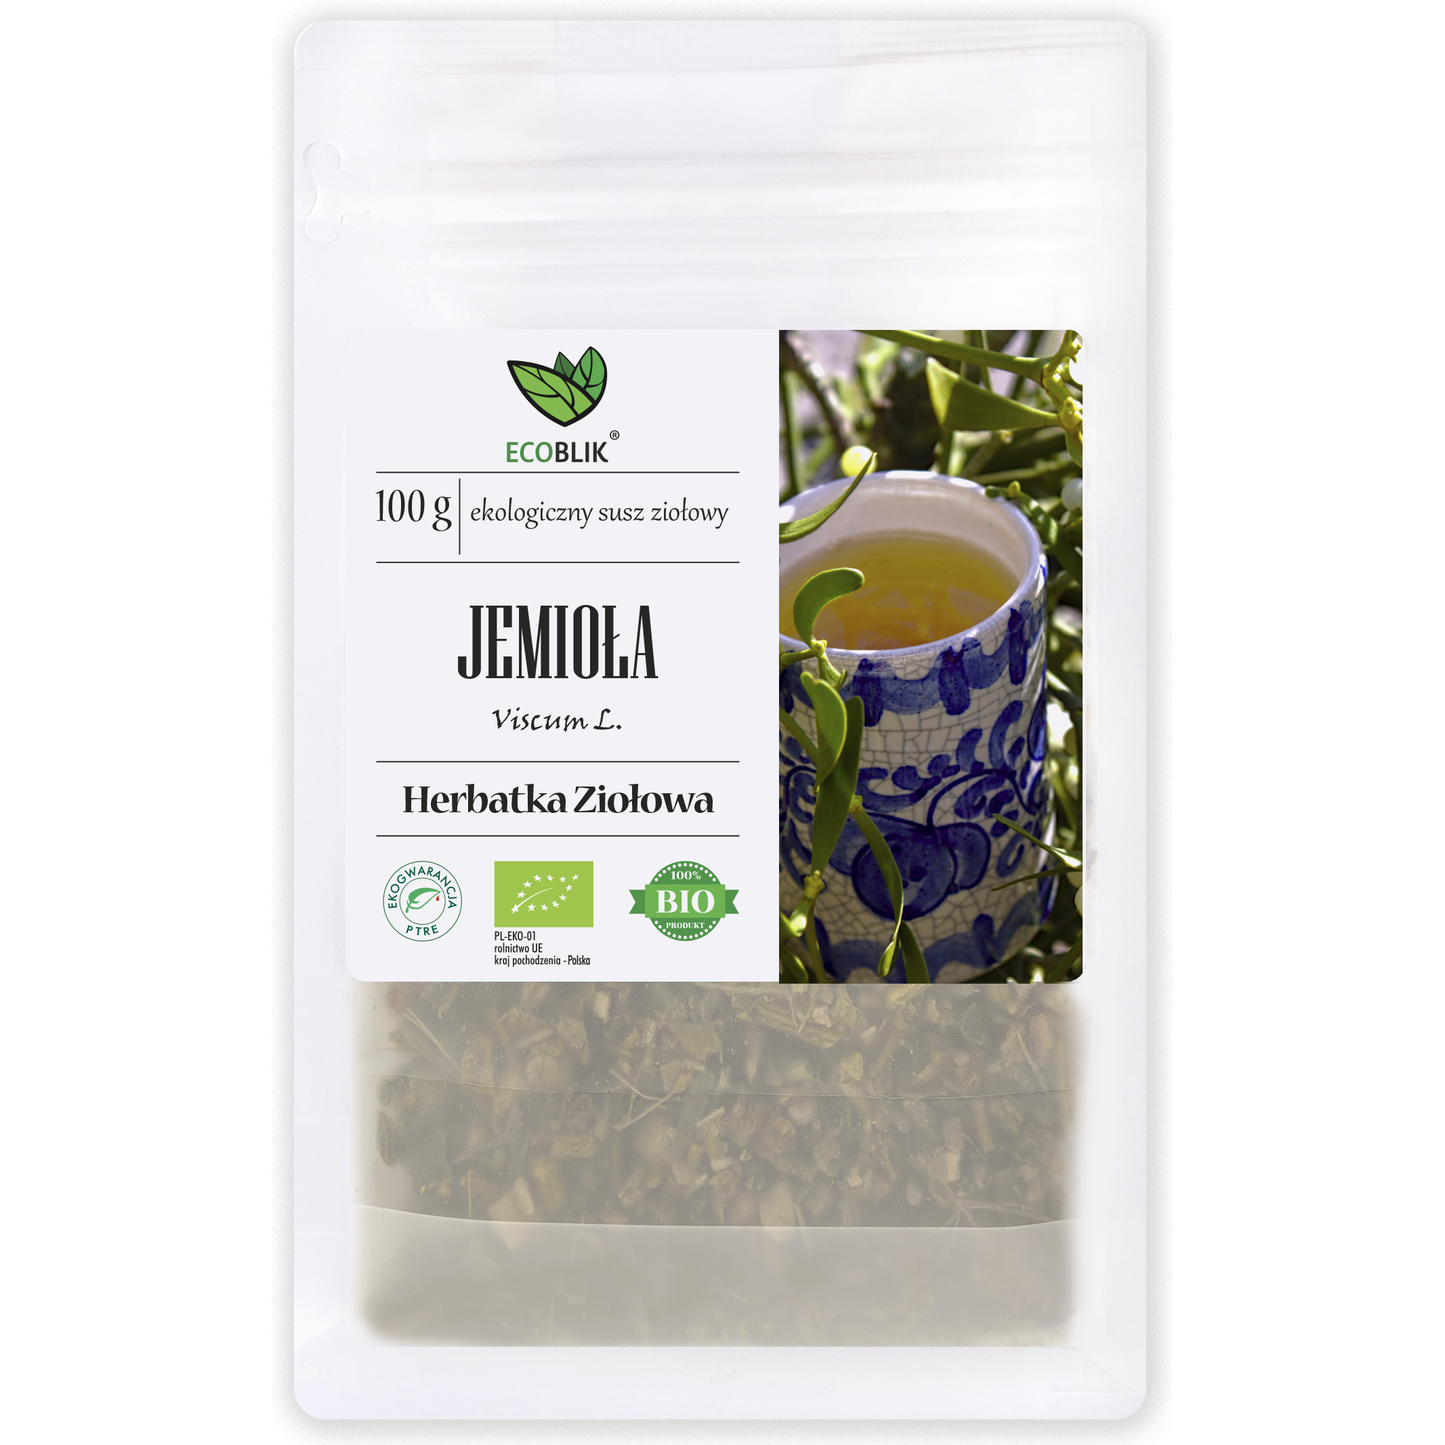 EcoBlik Organic Mistletoe Herb, 100g